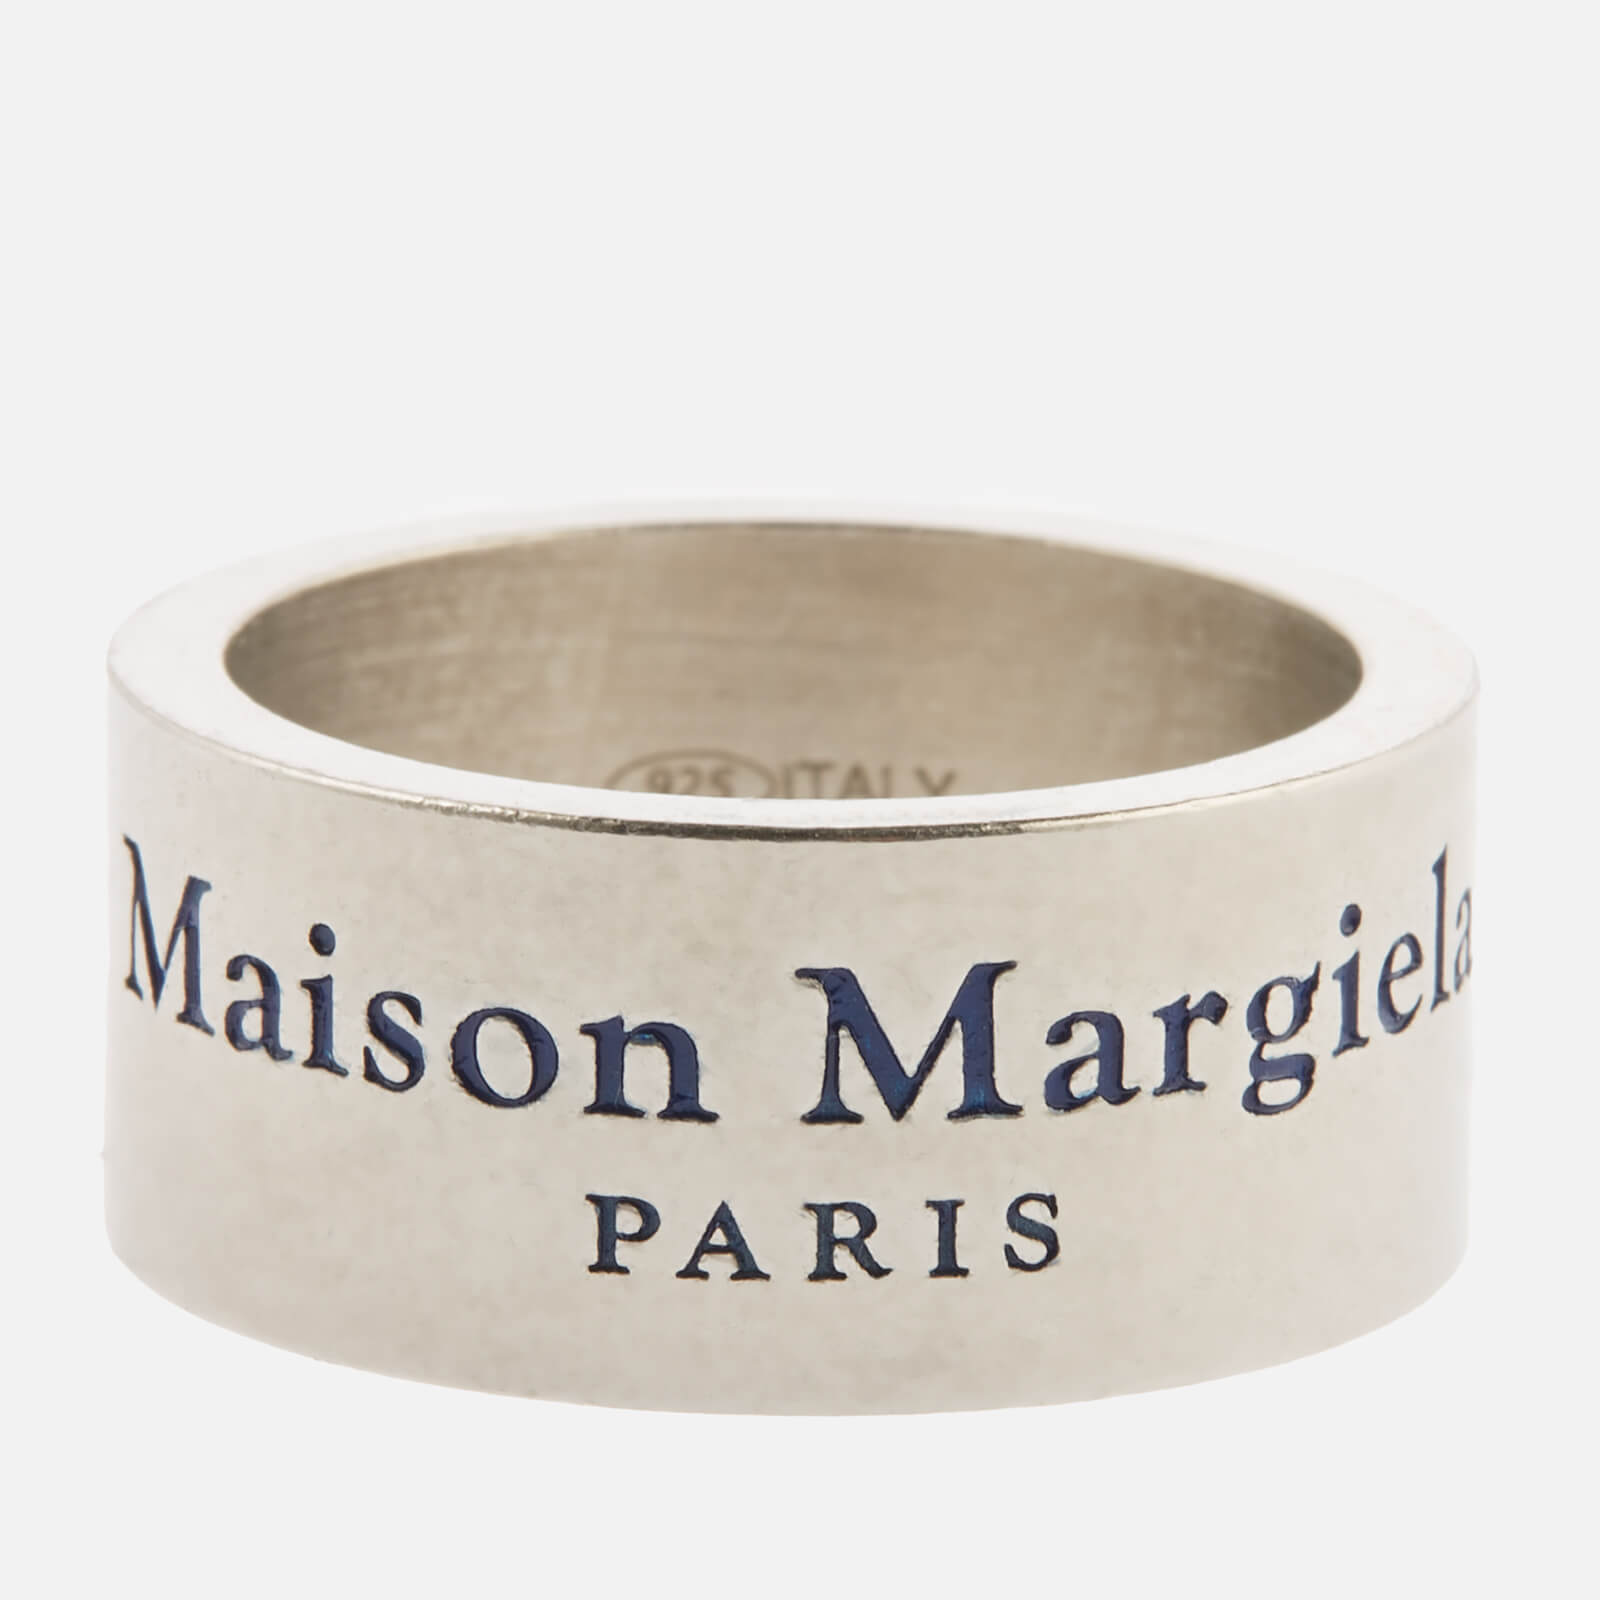 Maison Margiela Men's Ring - Dirty Silver/Medium Blue/Raw Indigo - 8